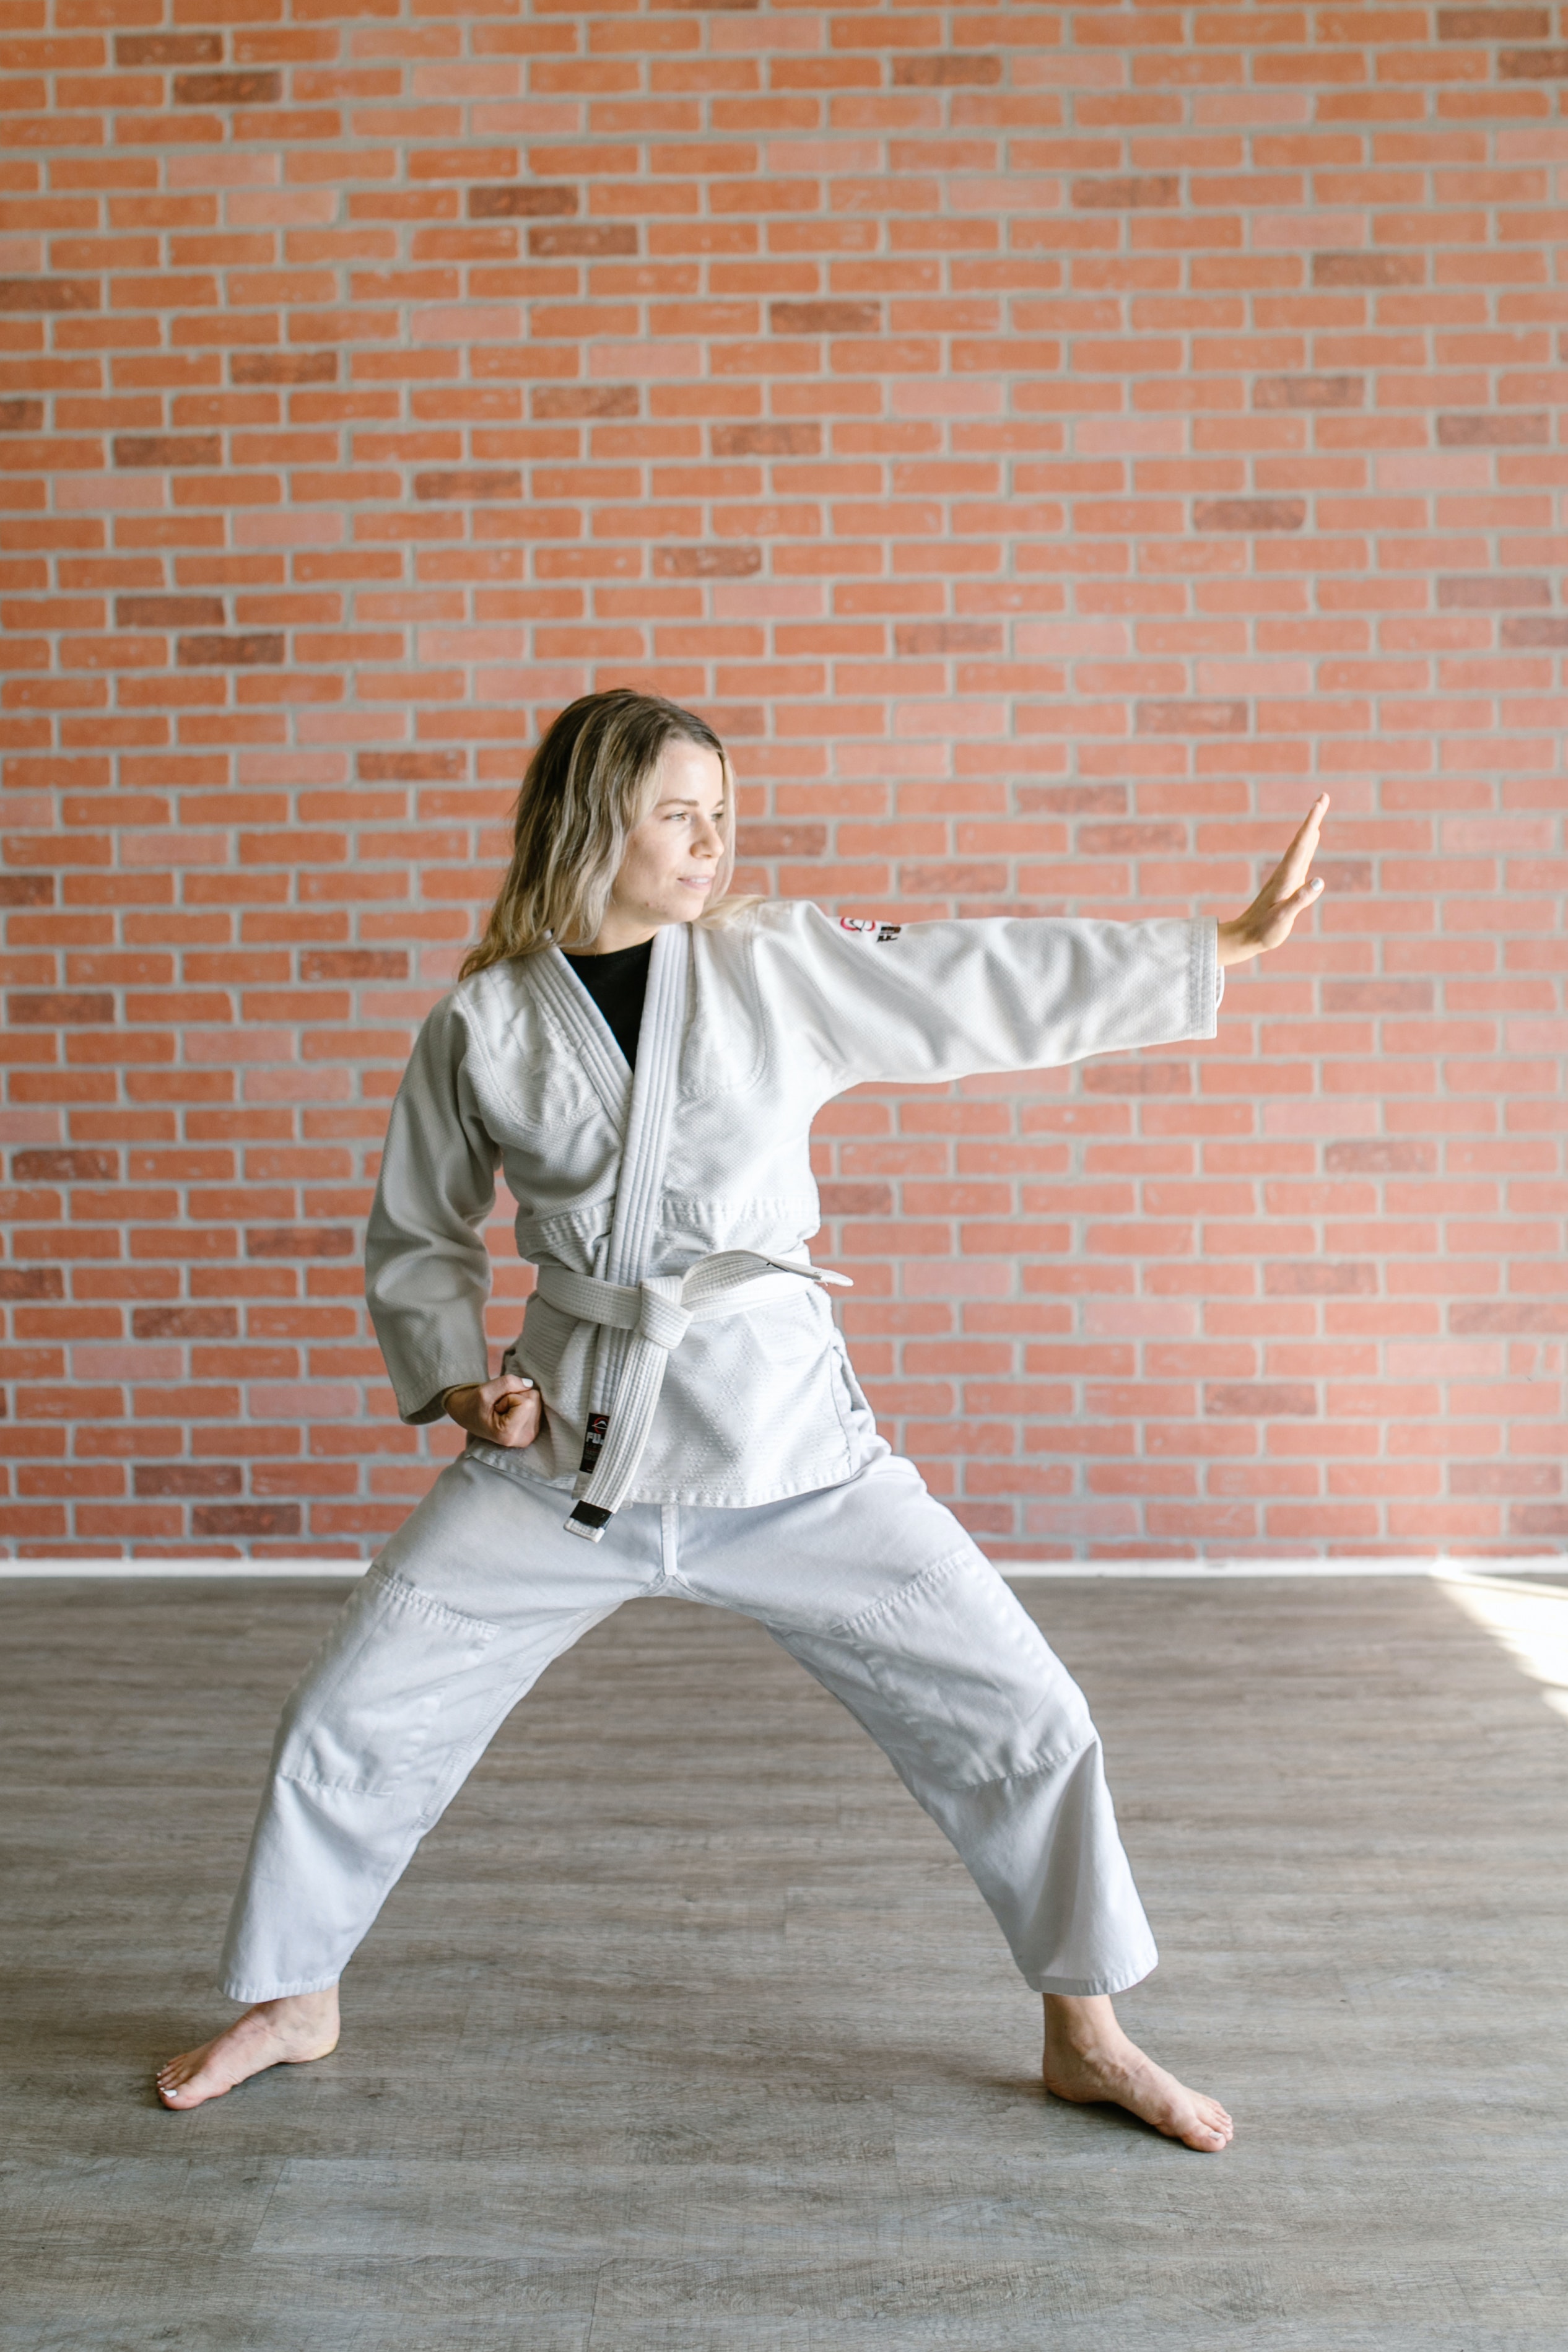 Karate Wallpapers